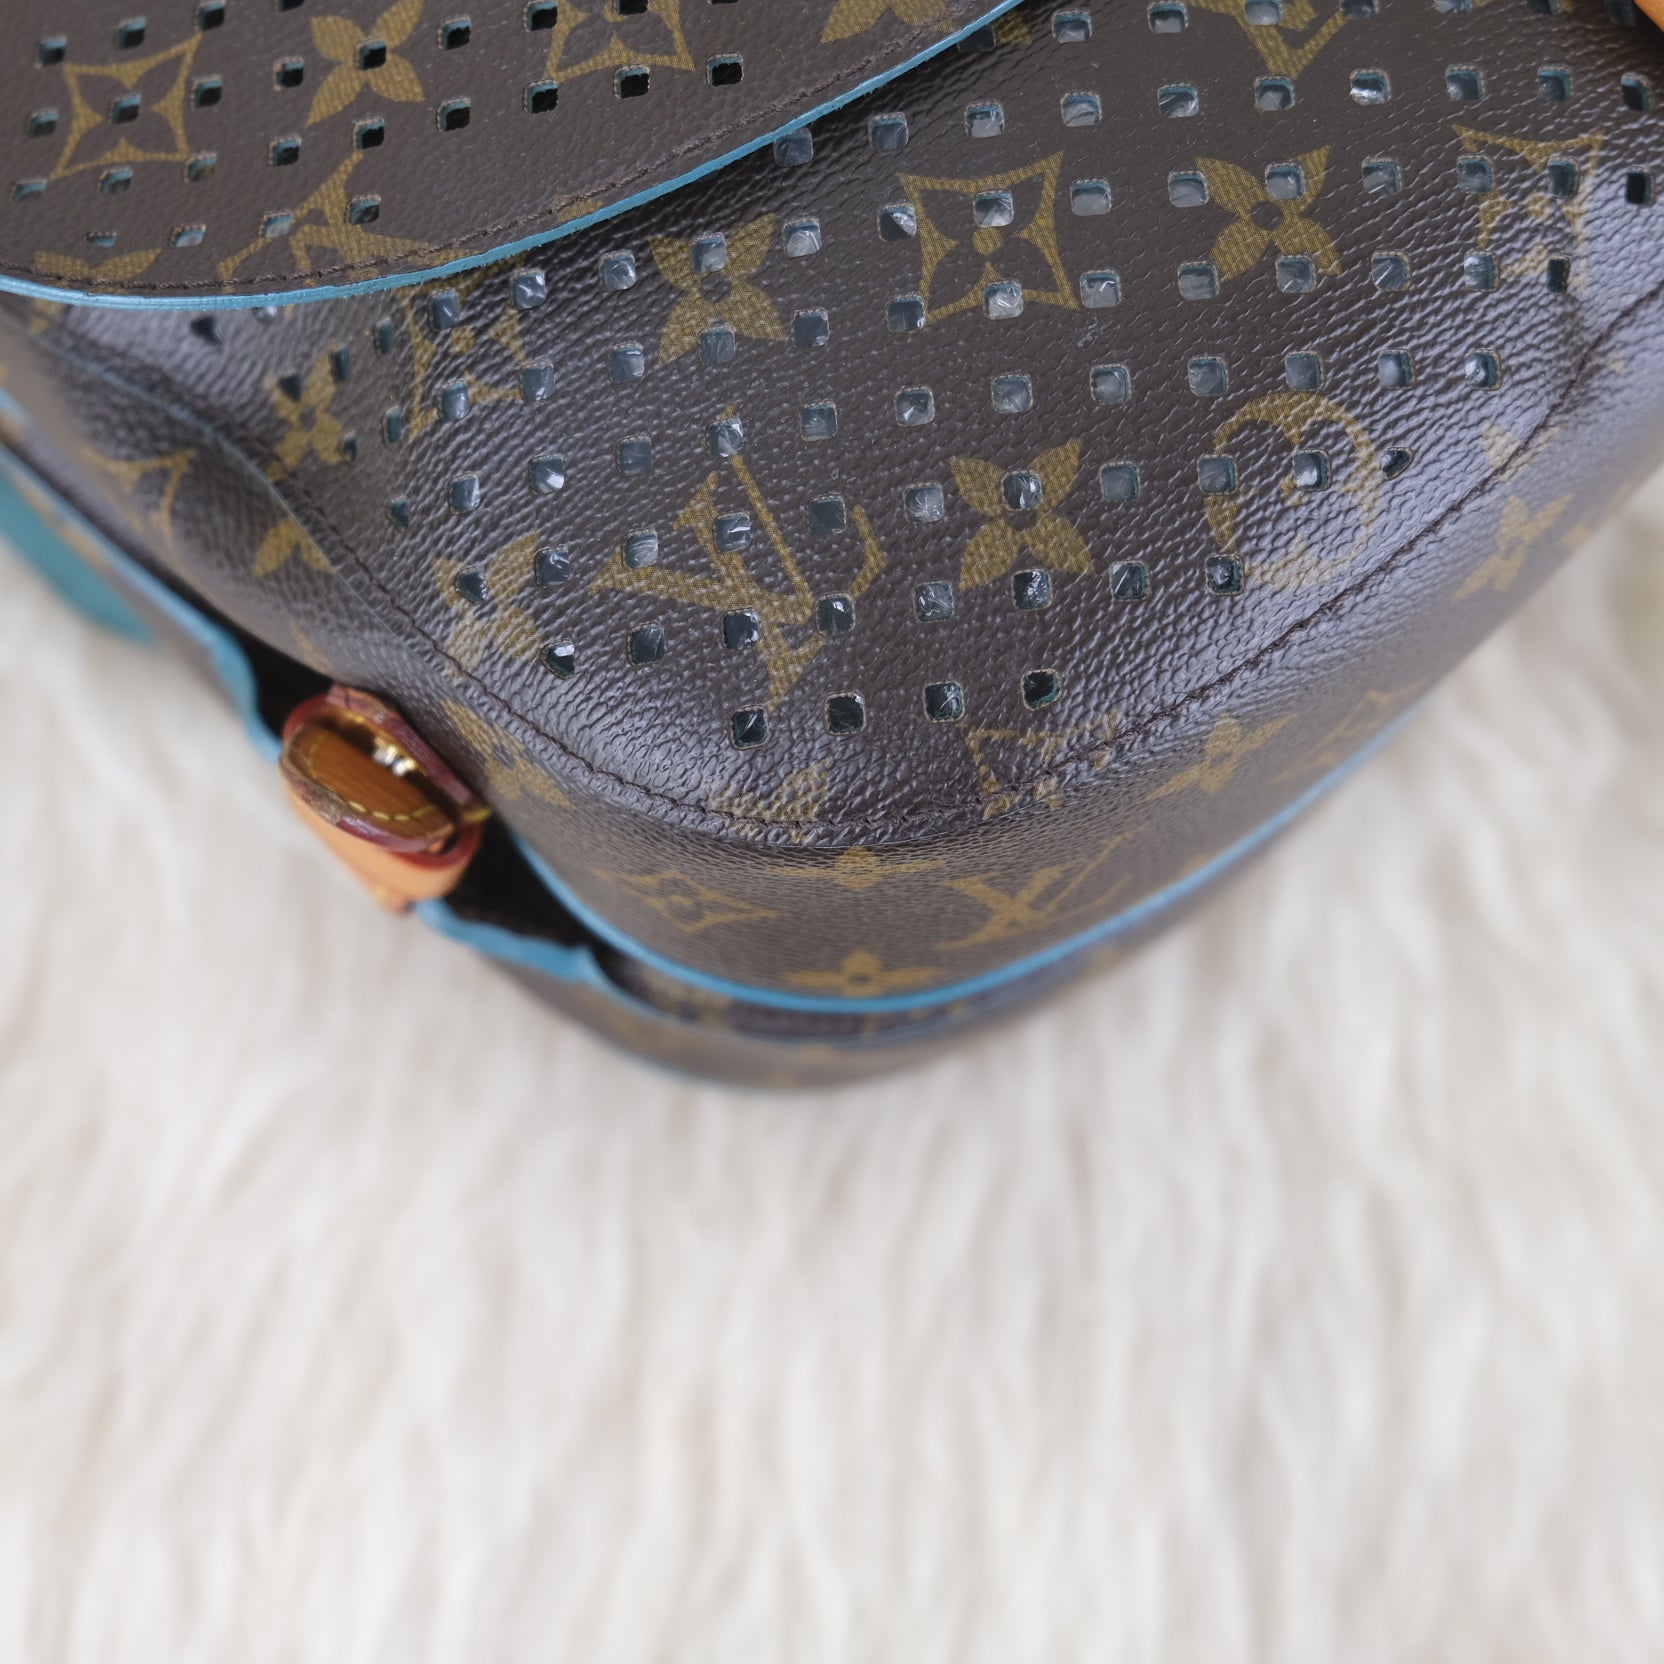 Louis Vuitton Turquoise and Gold Monogram Handbag